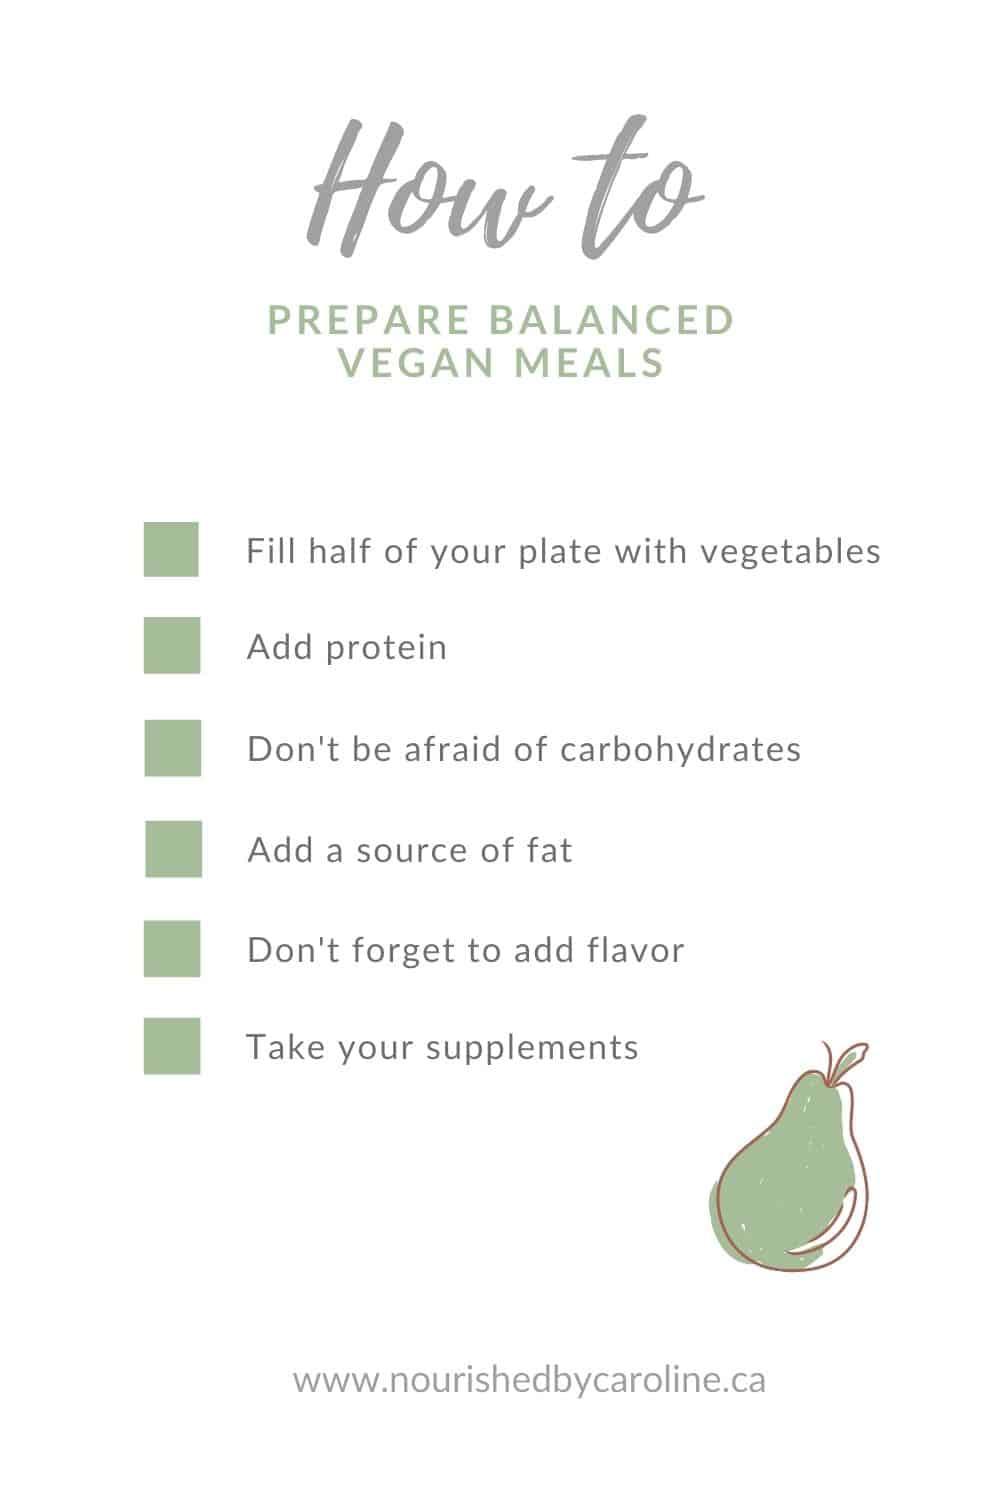 list of tips to prepare balanced vegan meals 